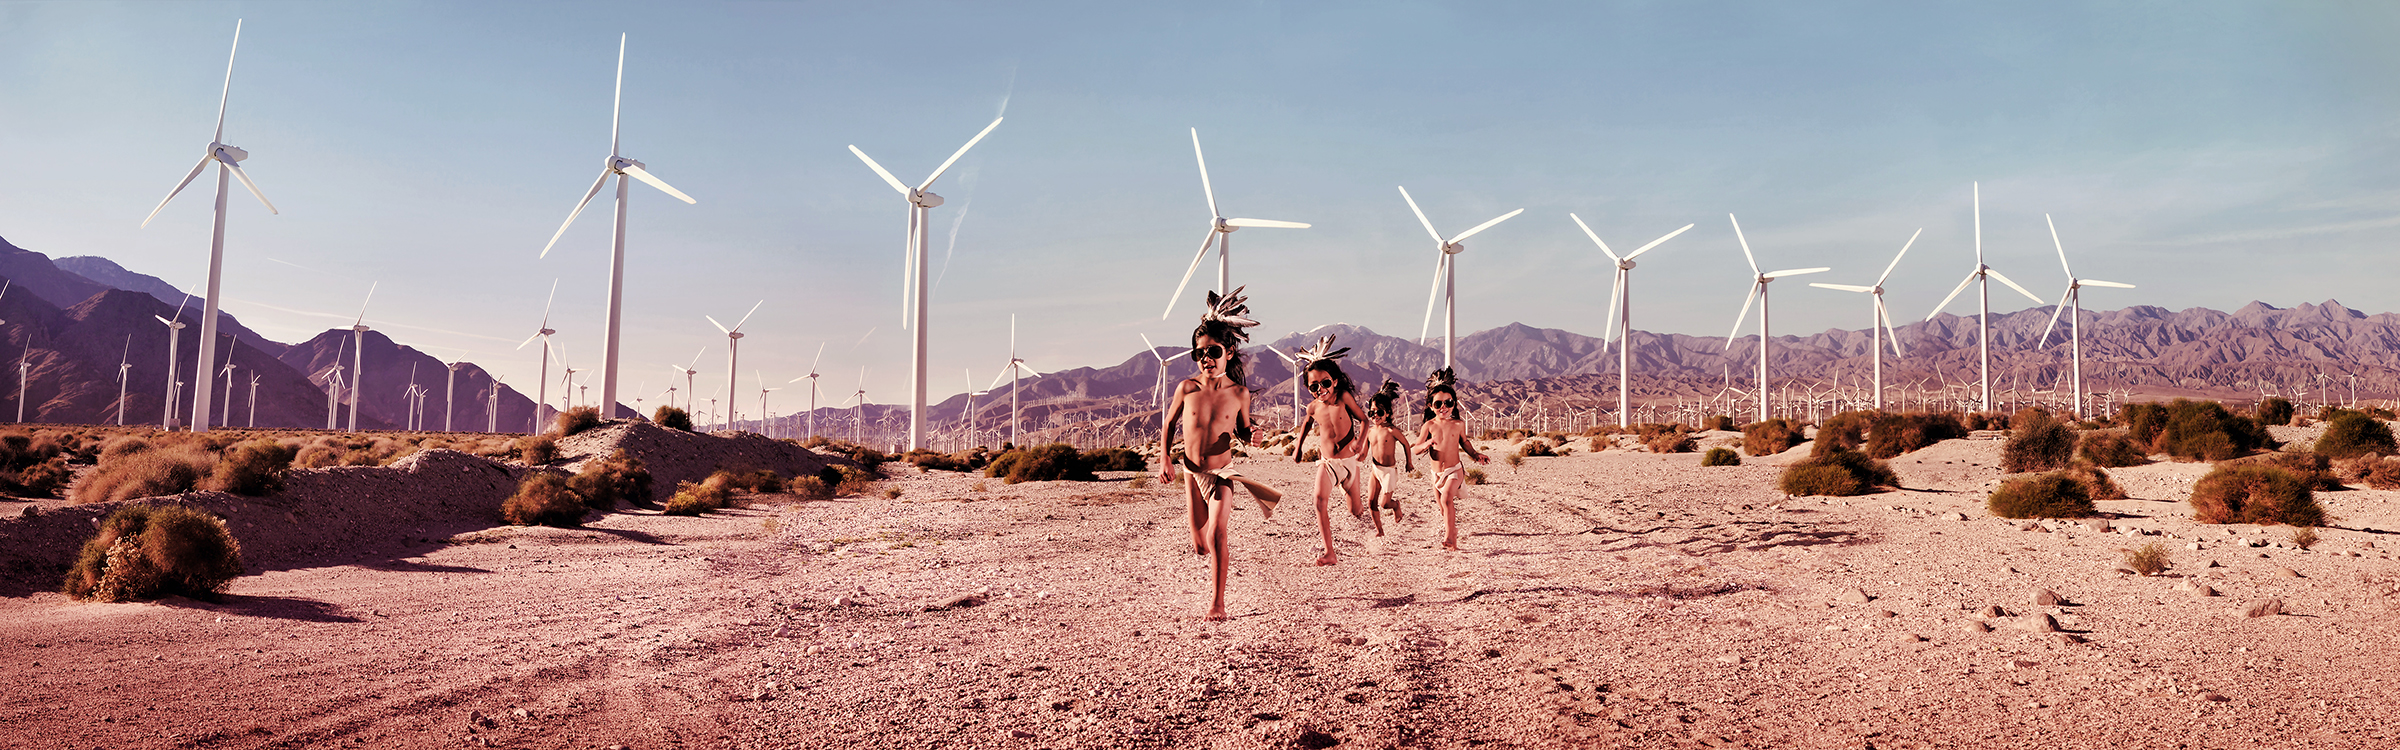 four children in indigenous dress run joyfully in  a dessert field with  wind turbines 